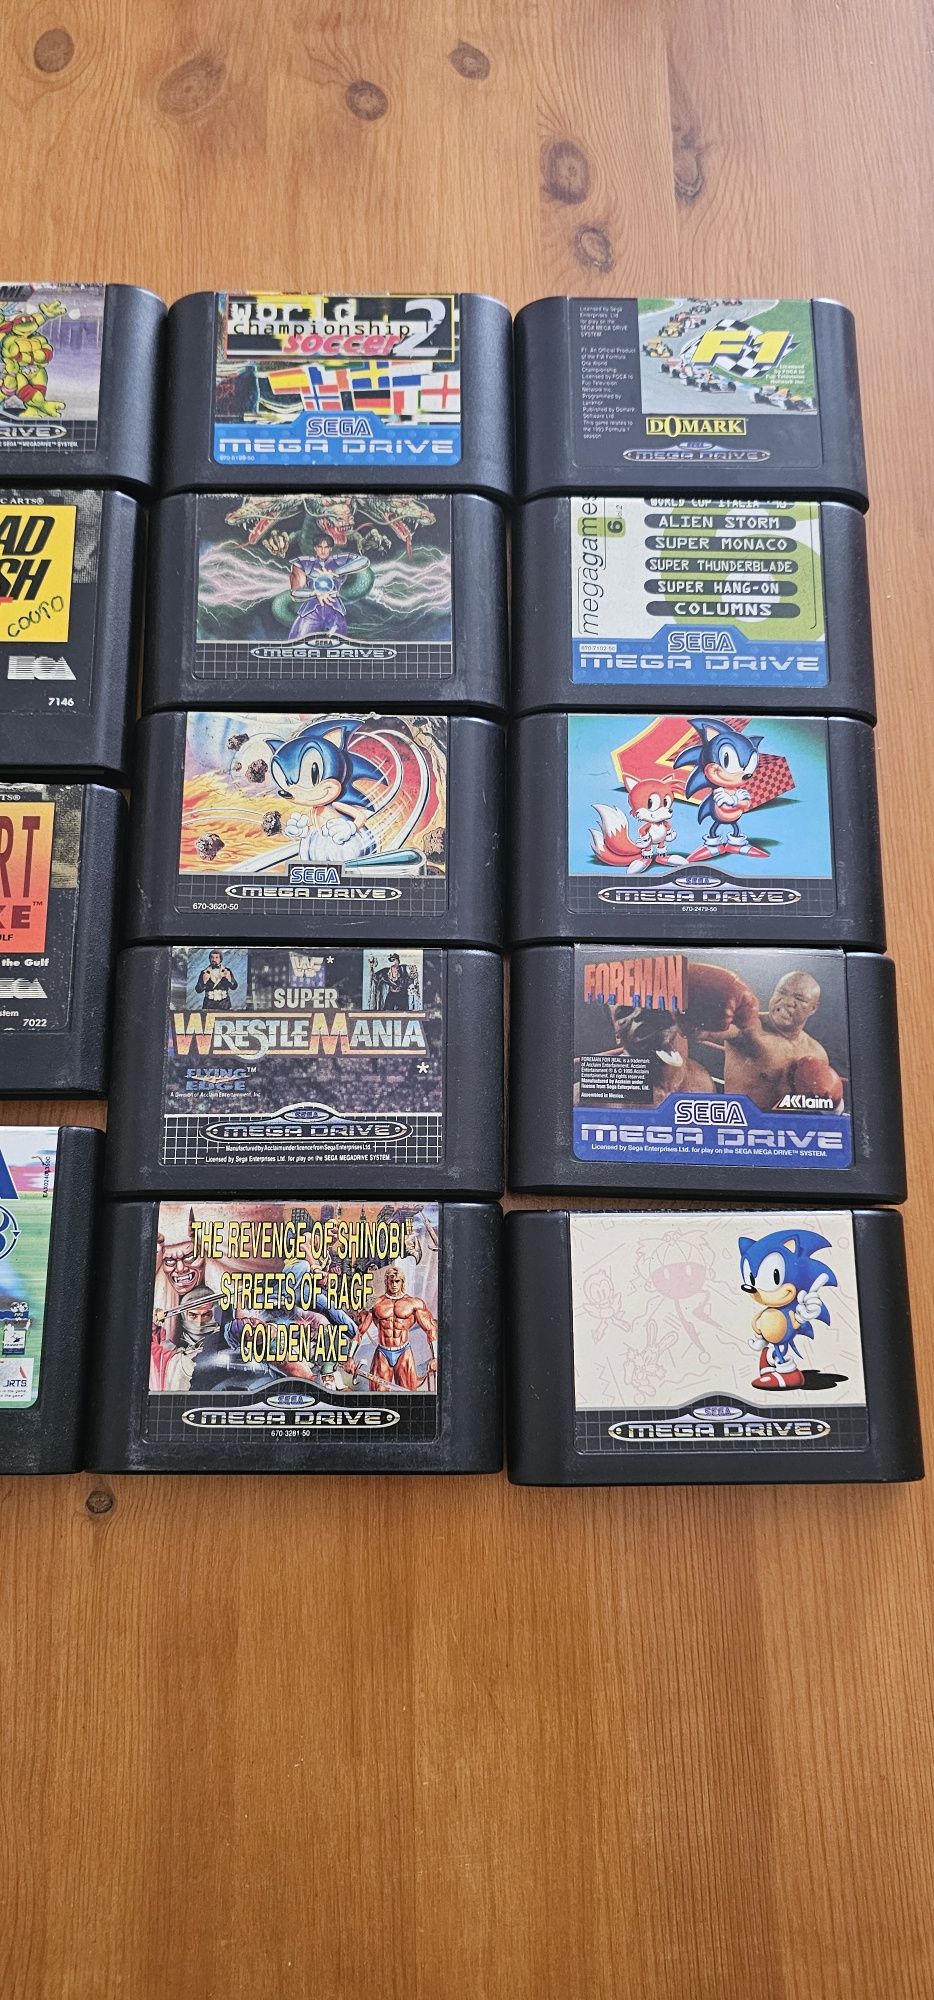 Vários cartuchos Sega Mega Drive, Game Gear, Atari